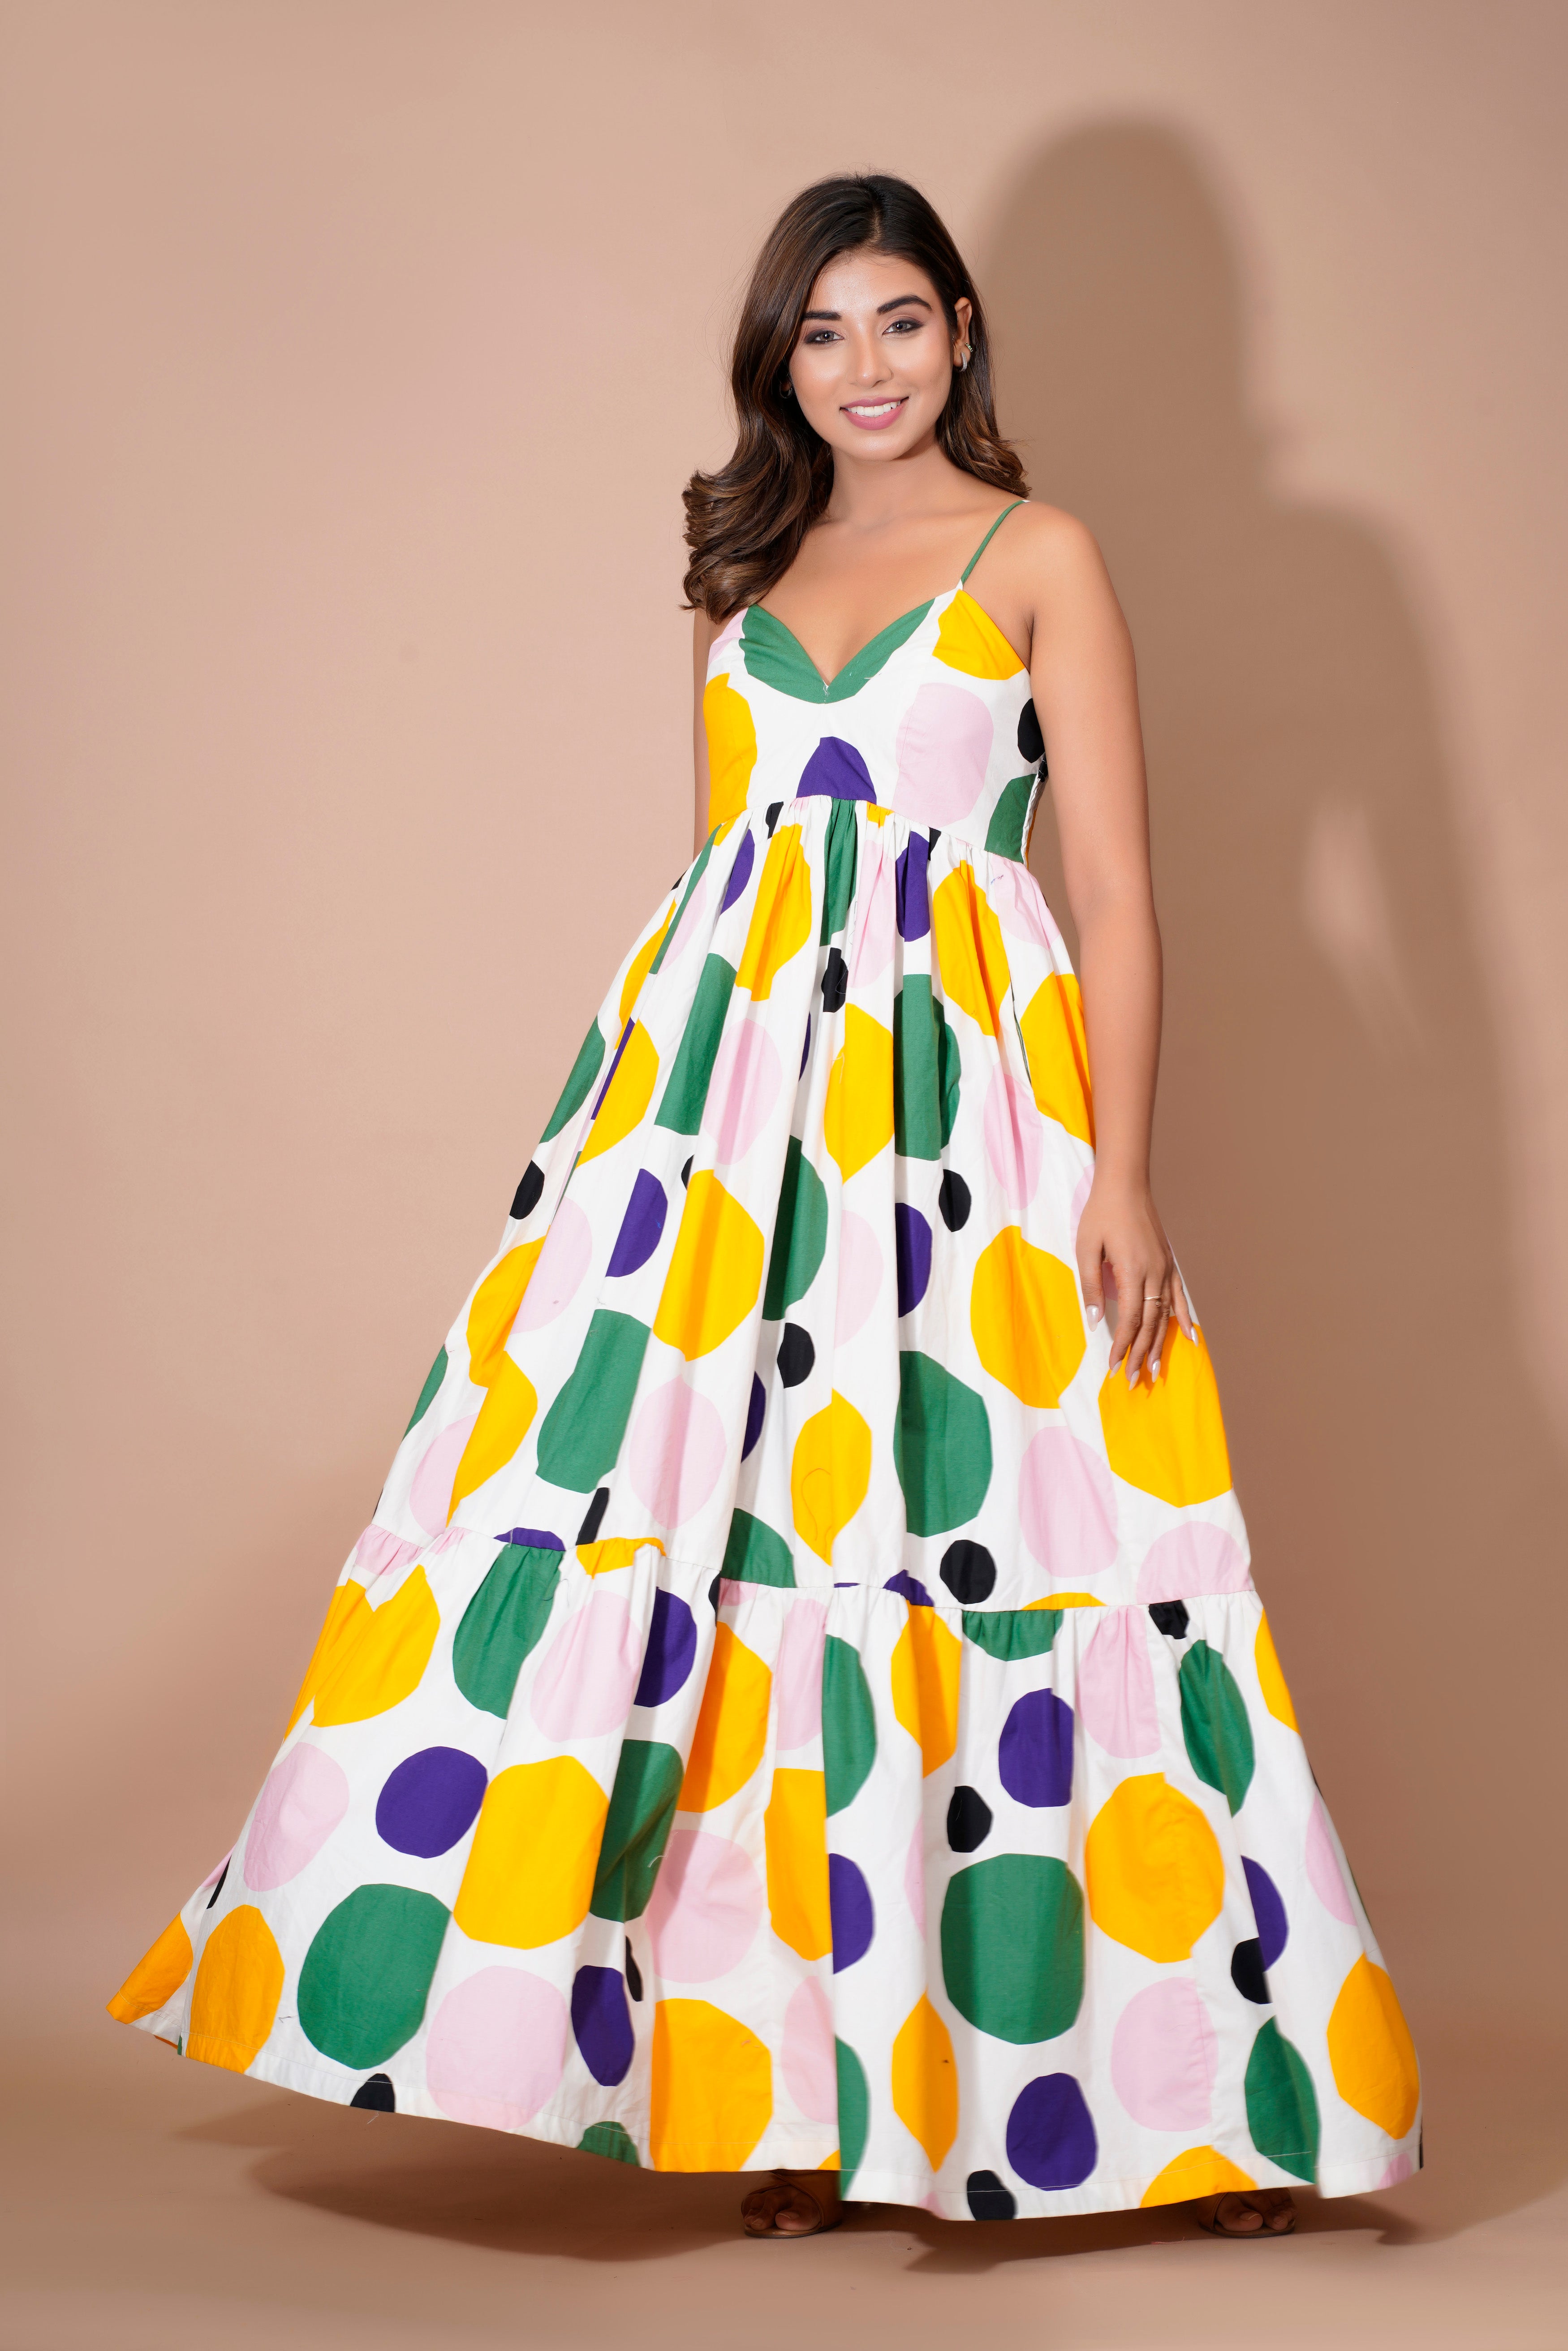 Graphic Polka Dot Pattern Dress